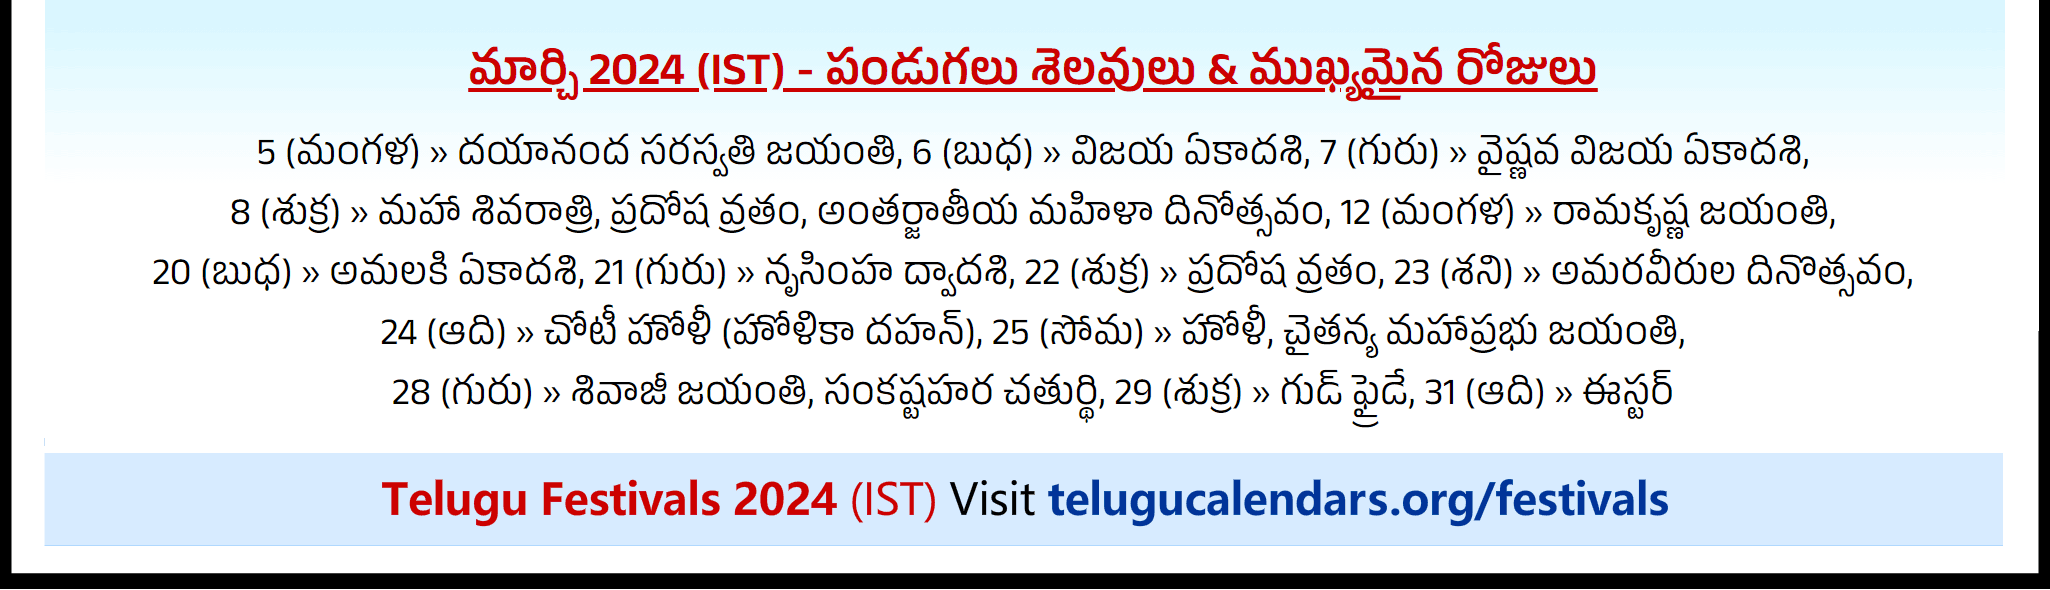 Telugu Festivals 2024 March Chicago